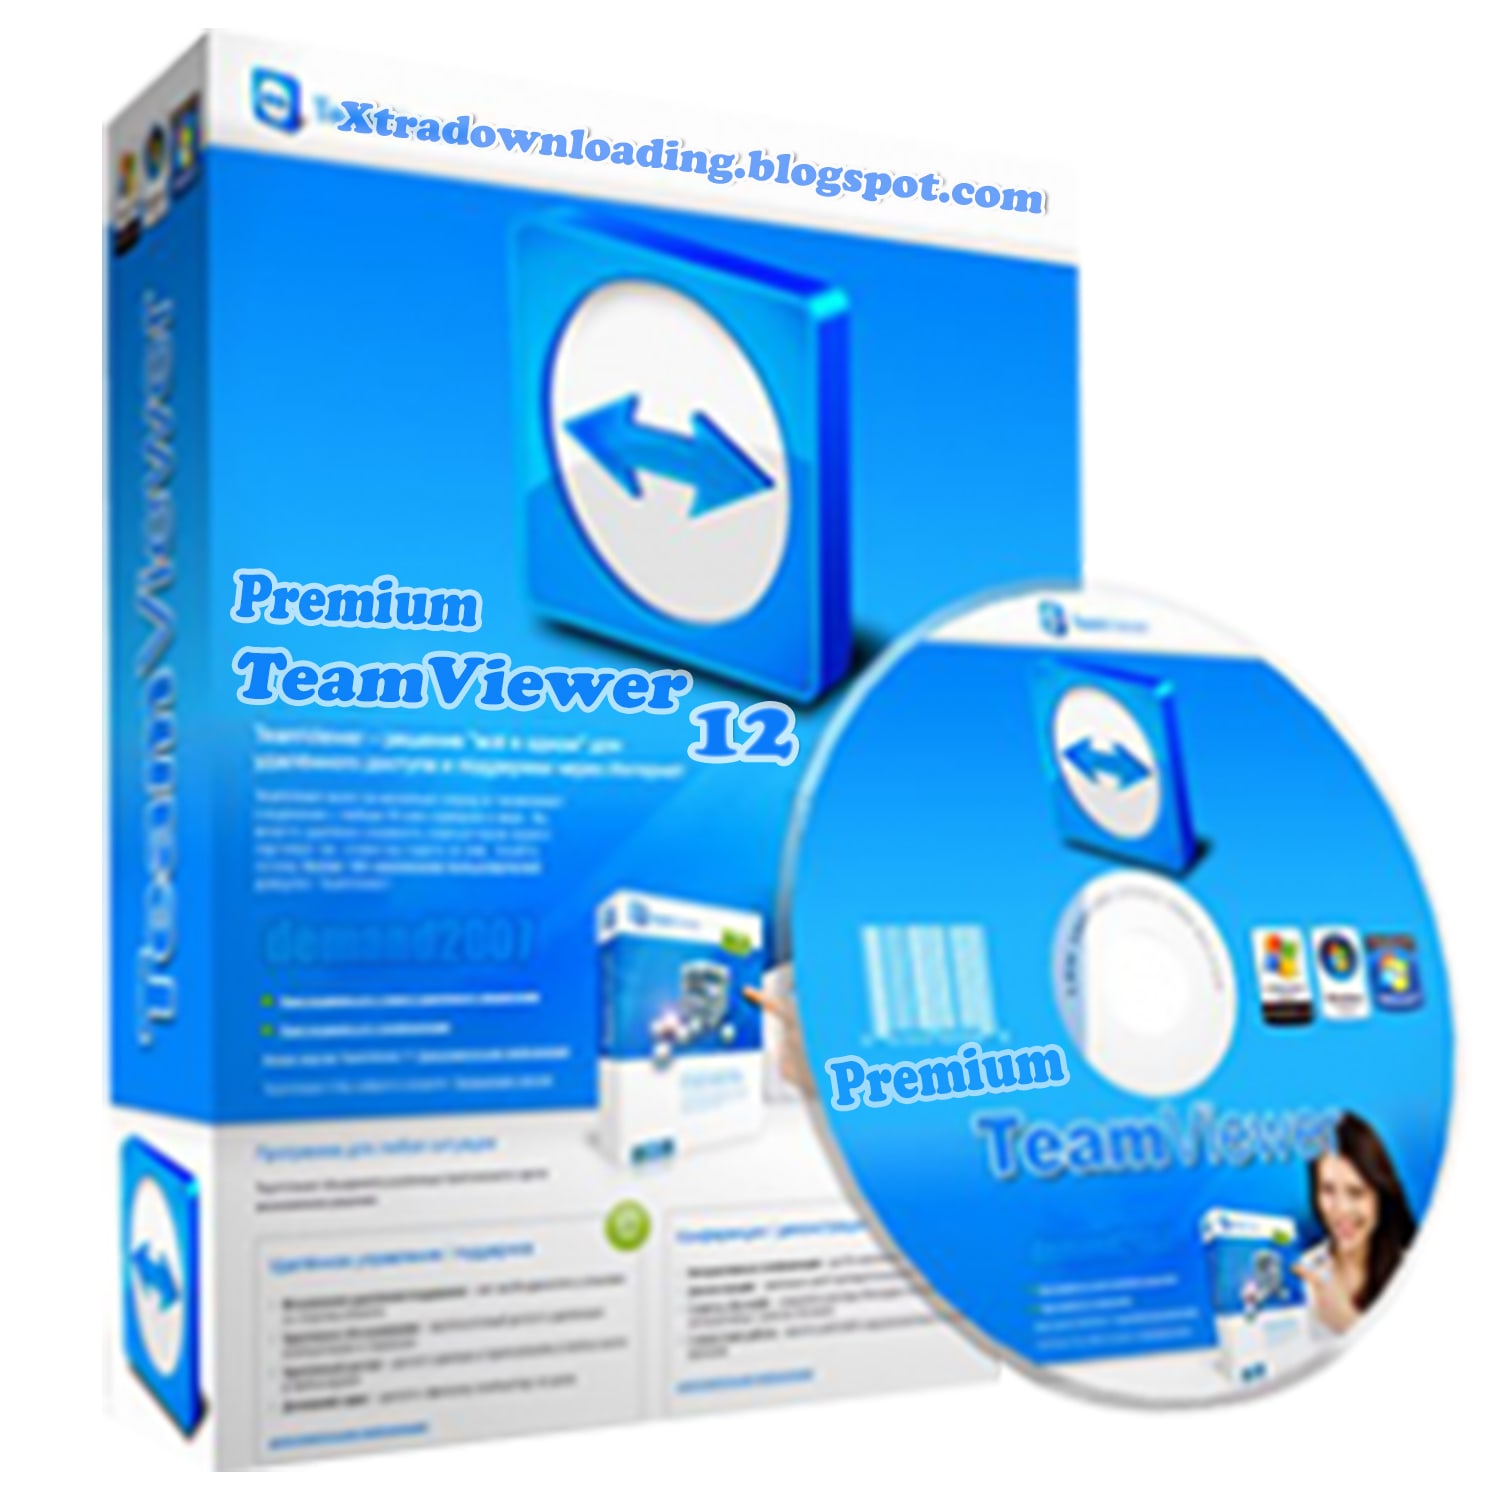 teamviewer 12 download full version free